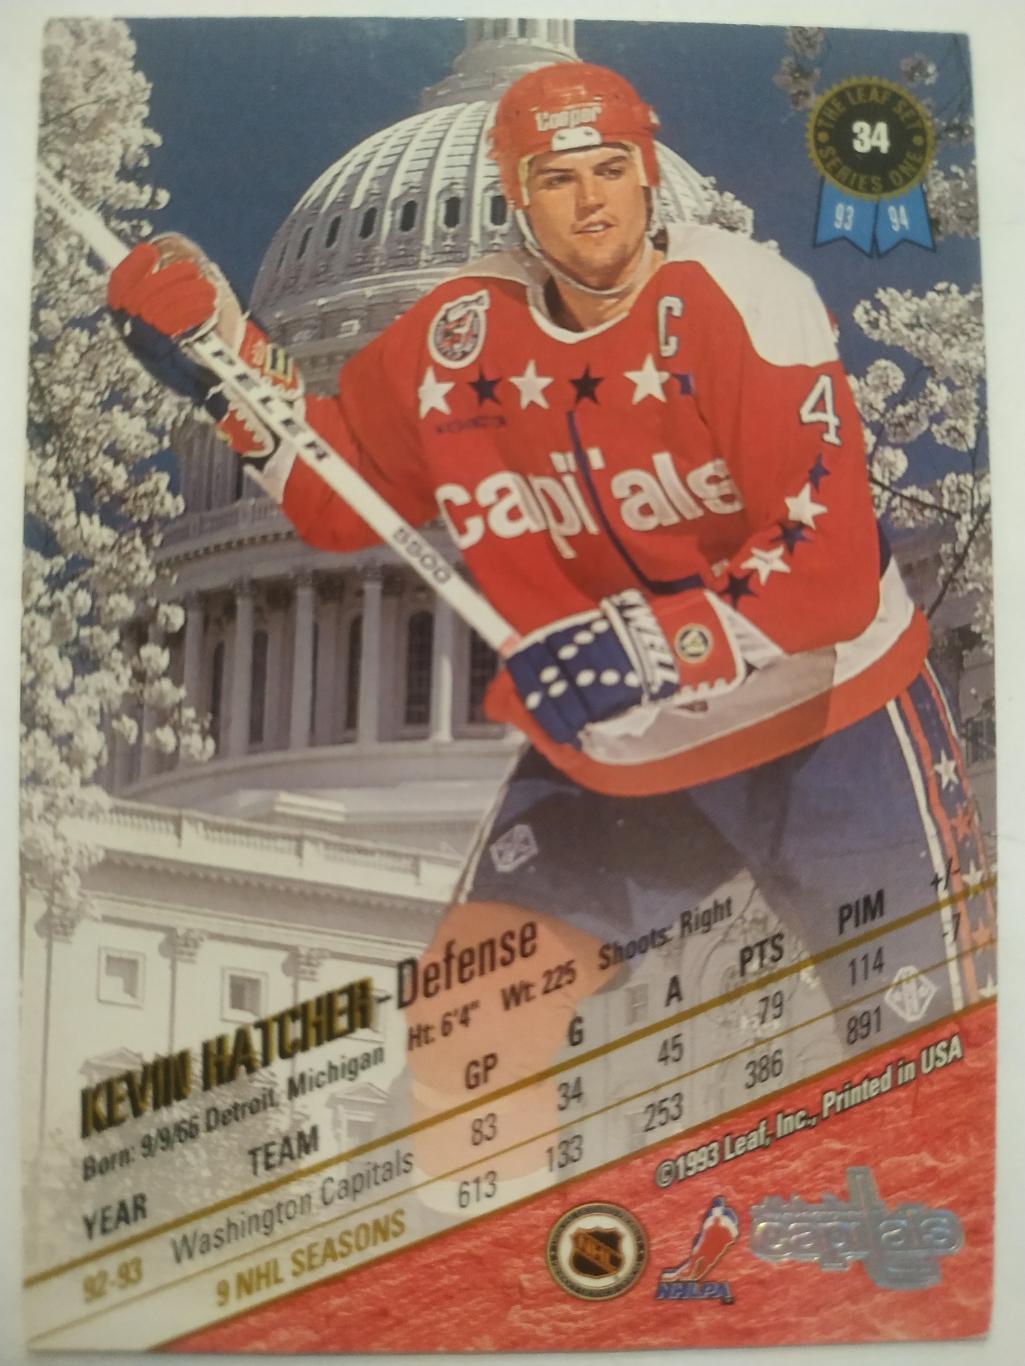 ХОККЕЙ КАРТОЧКА НХЛ LEAF SET SERIES ONE 1993-94 KEVIN HATCHER WASHINGTON #34 1